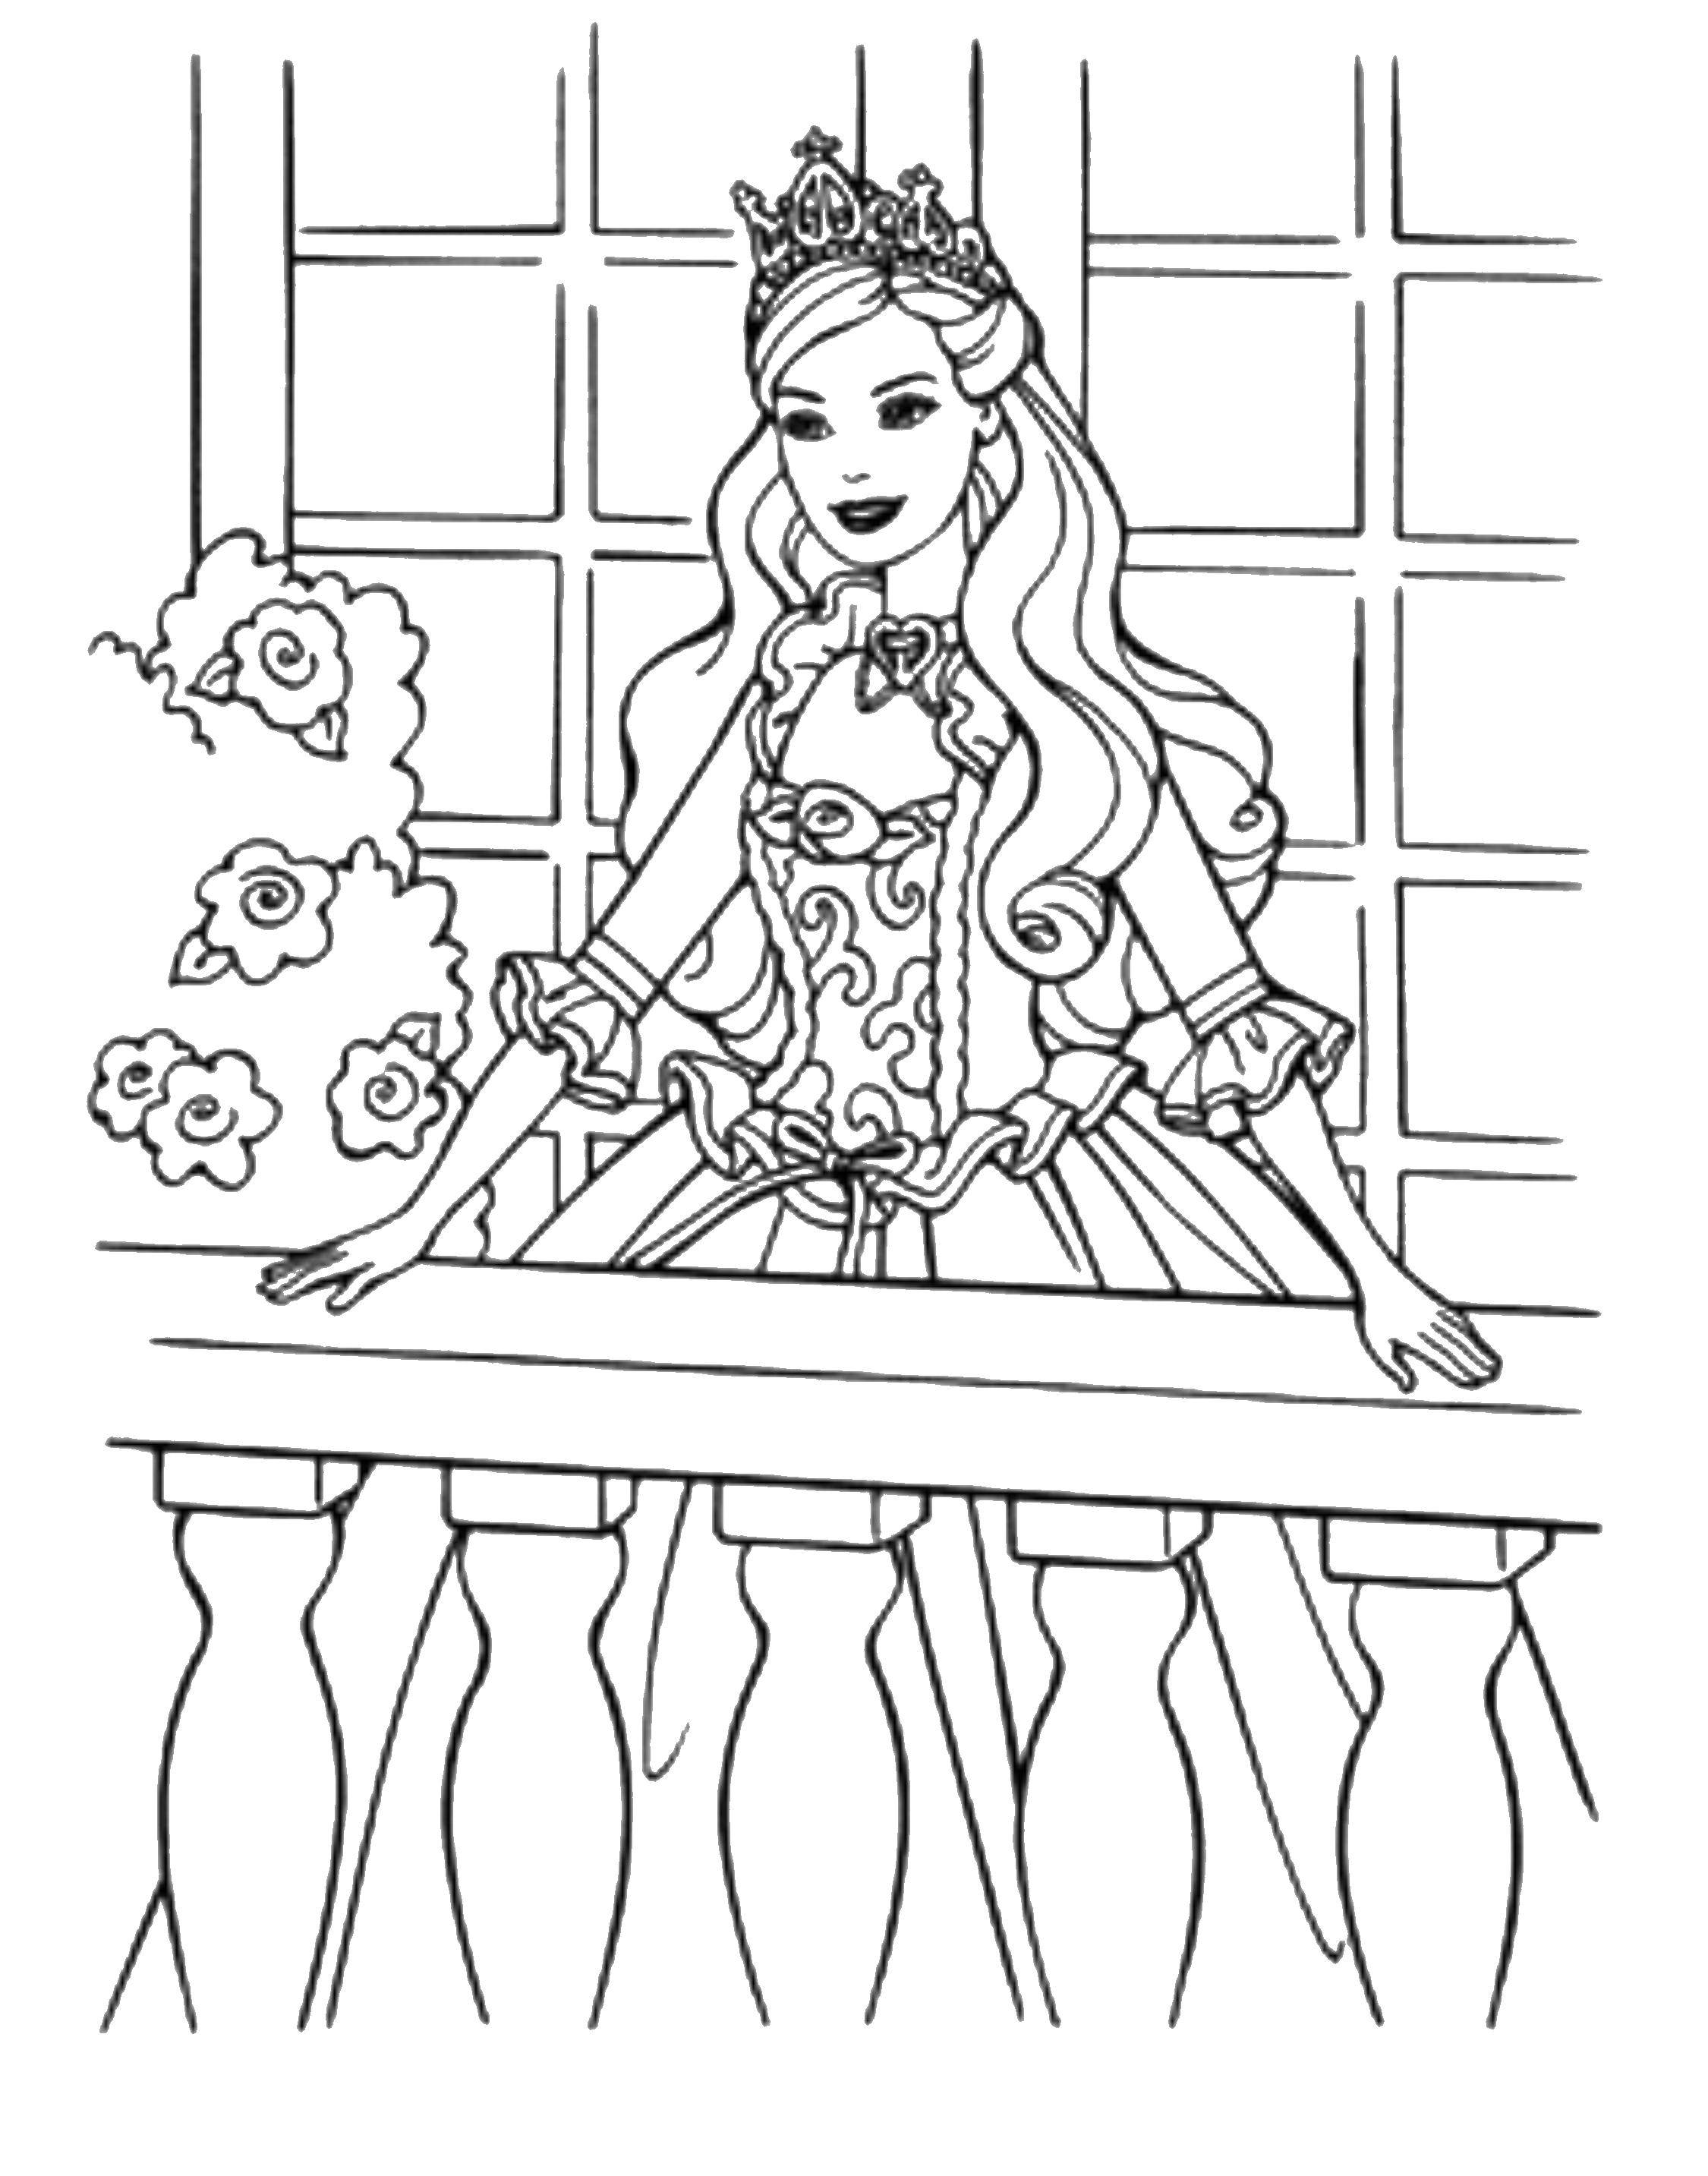 Coloring Princess on the balcony. Category Princess. Tags:  Princess dress.